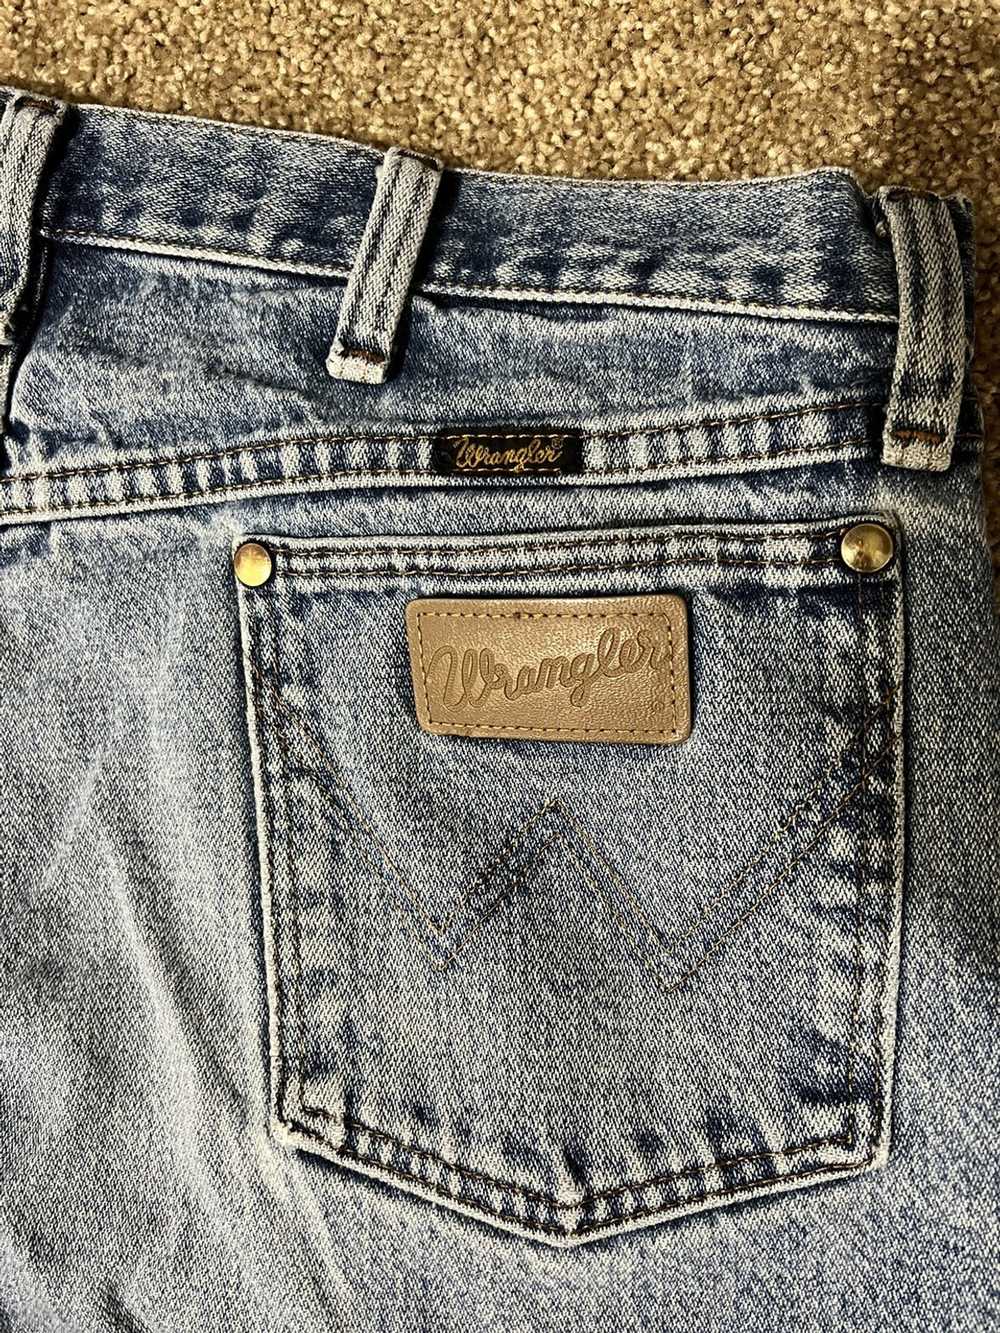 Wrangler Wrangler vintage jeans - image 3